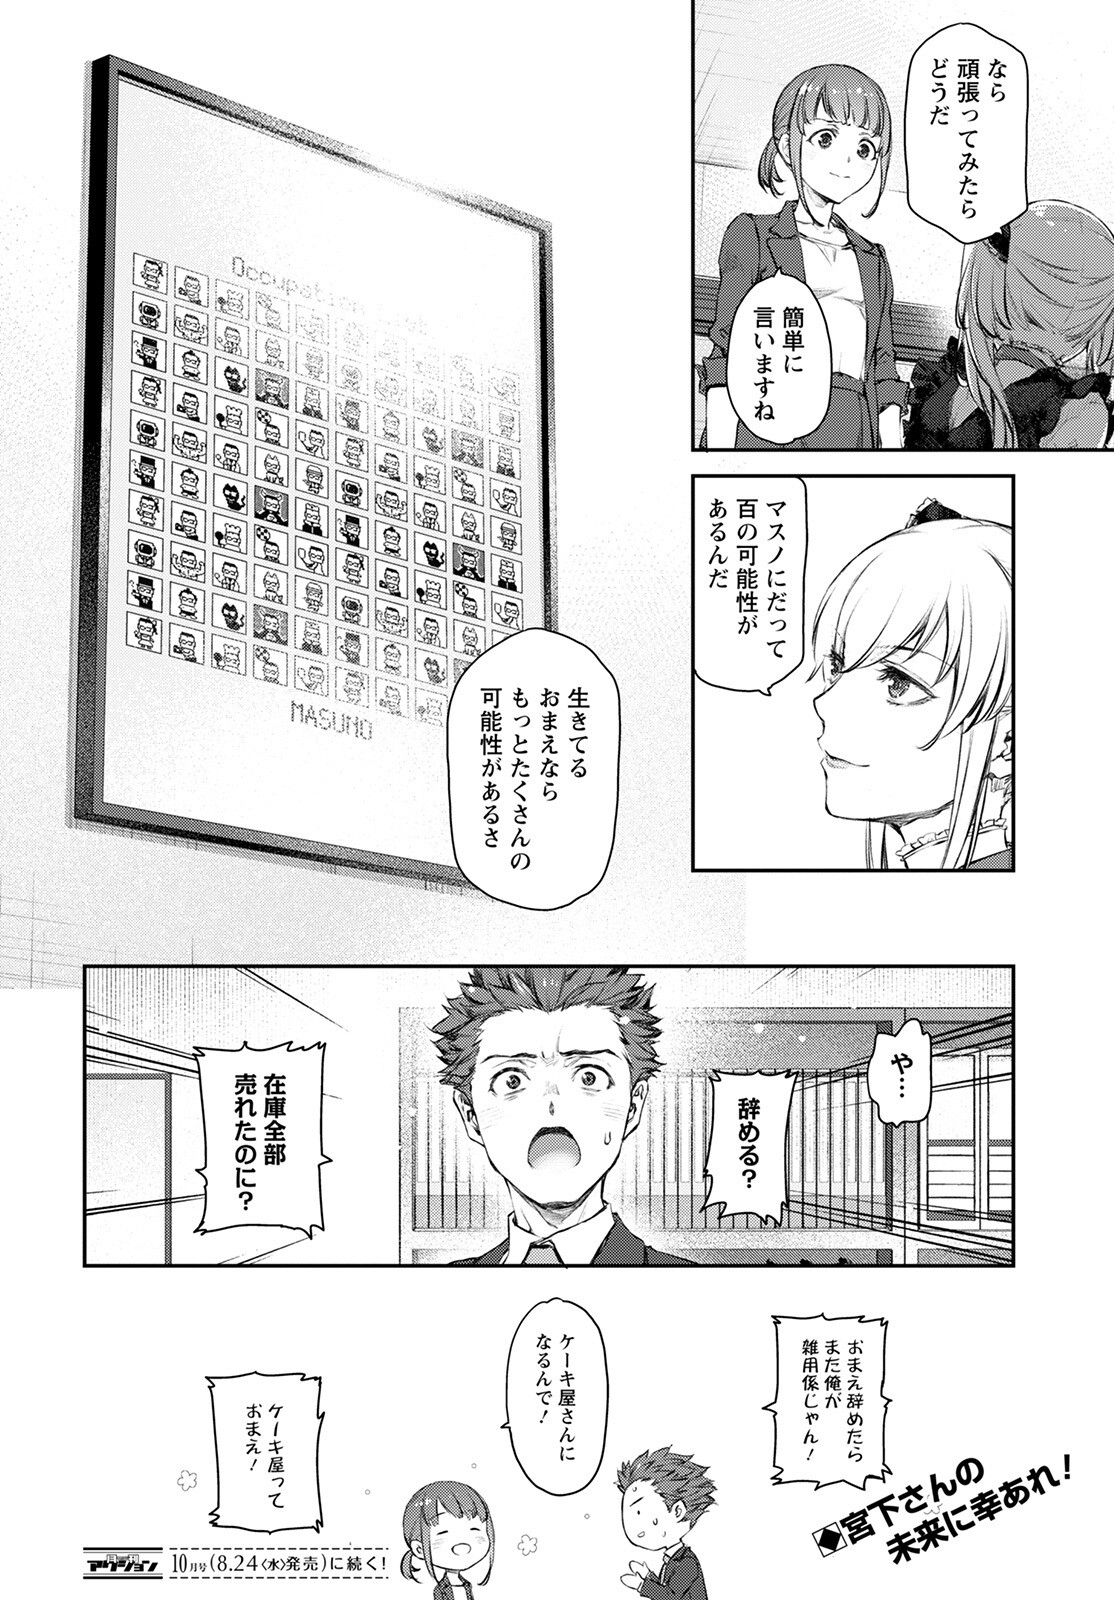 Uchi no Maid ga Uzasugiru! - Chapter 54 - Page 12